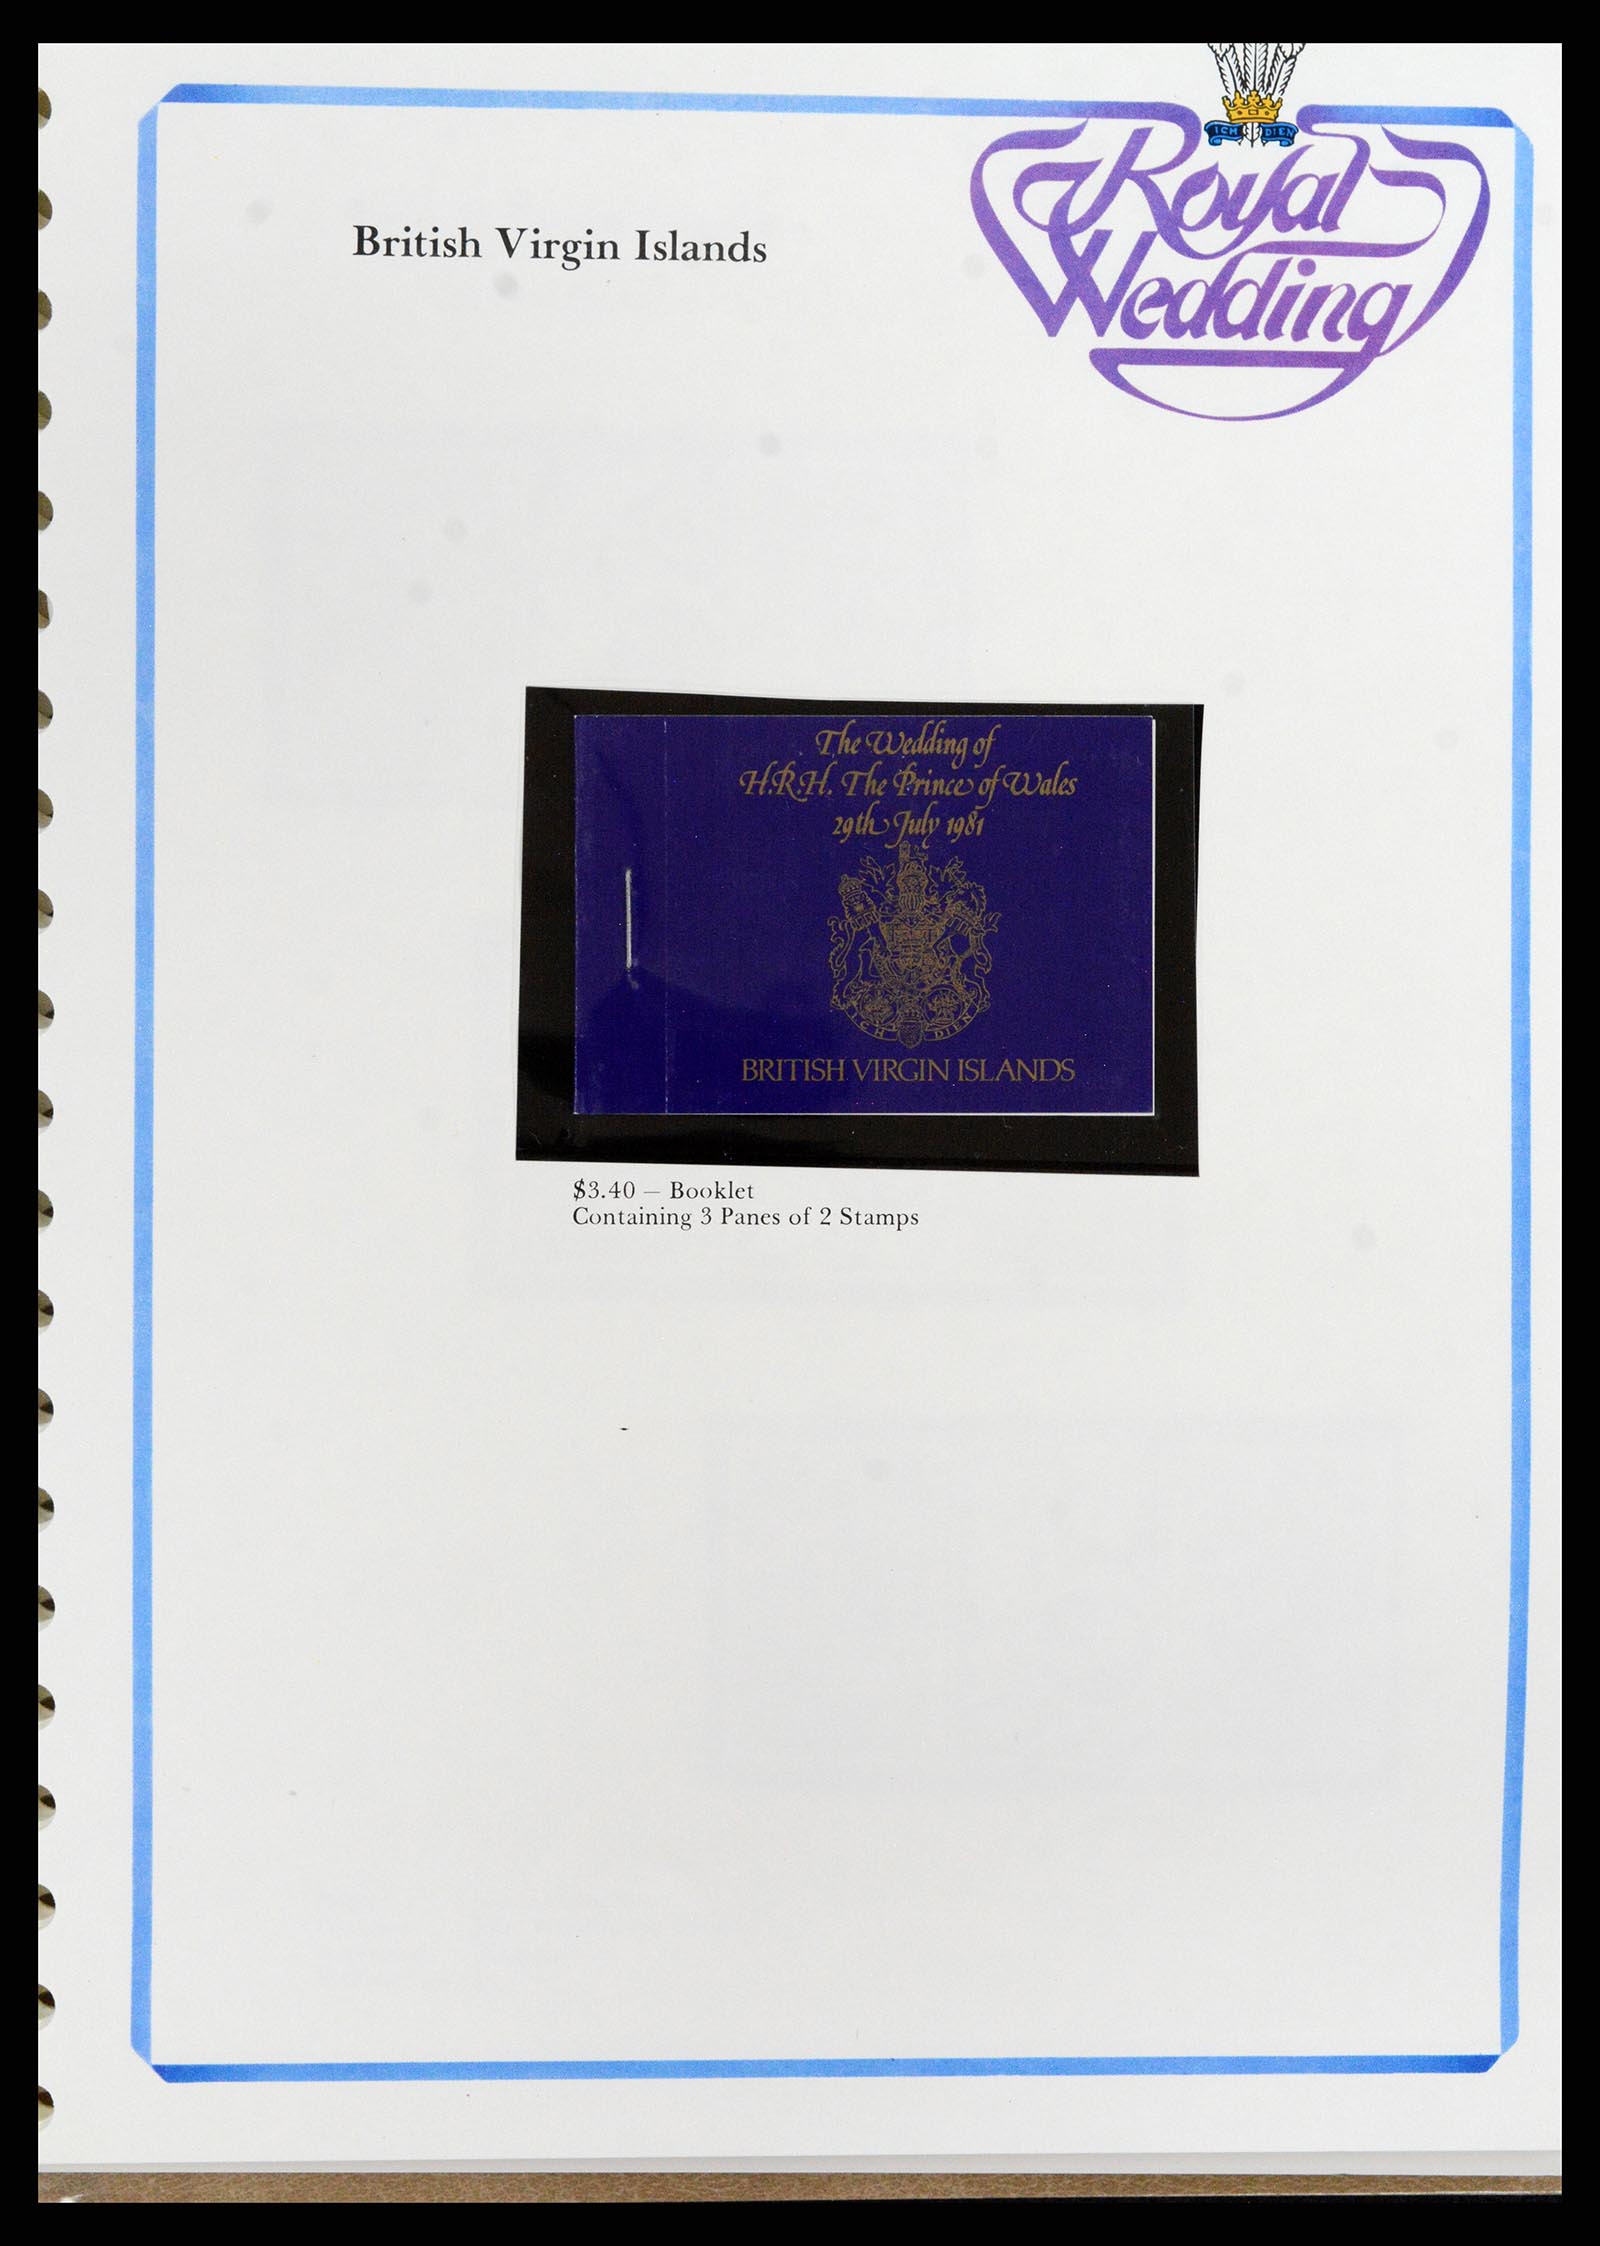 37818 035 - Stamp Collection 37818 Royal Wedding 1981.